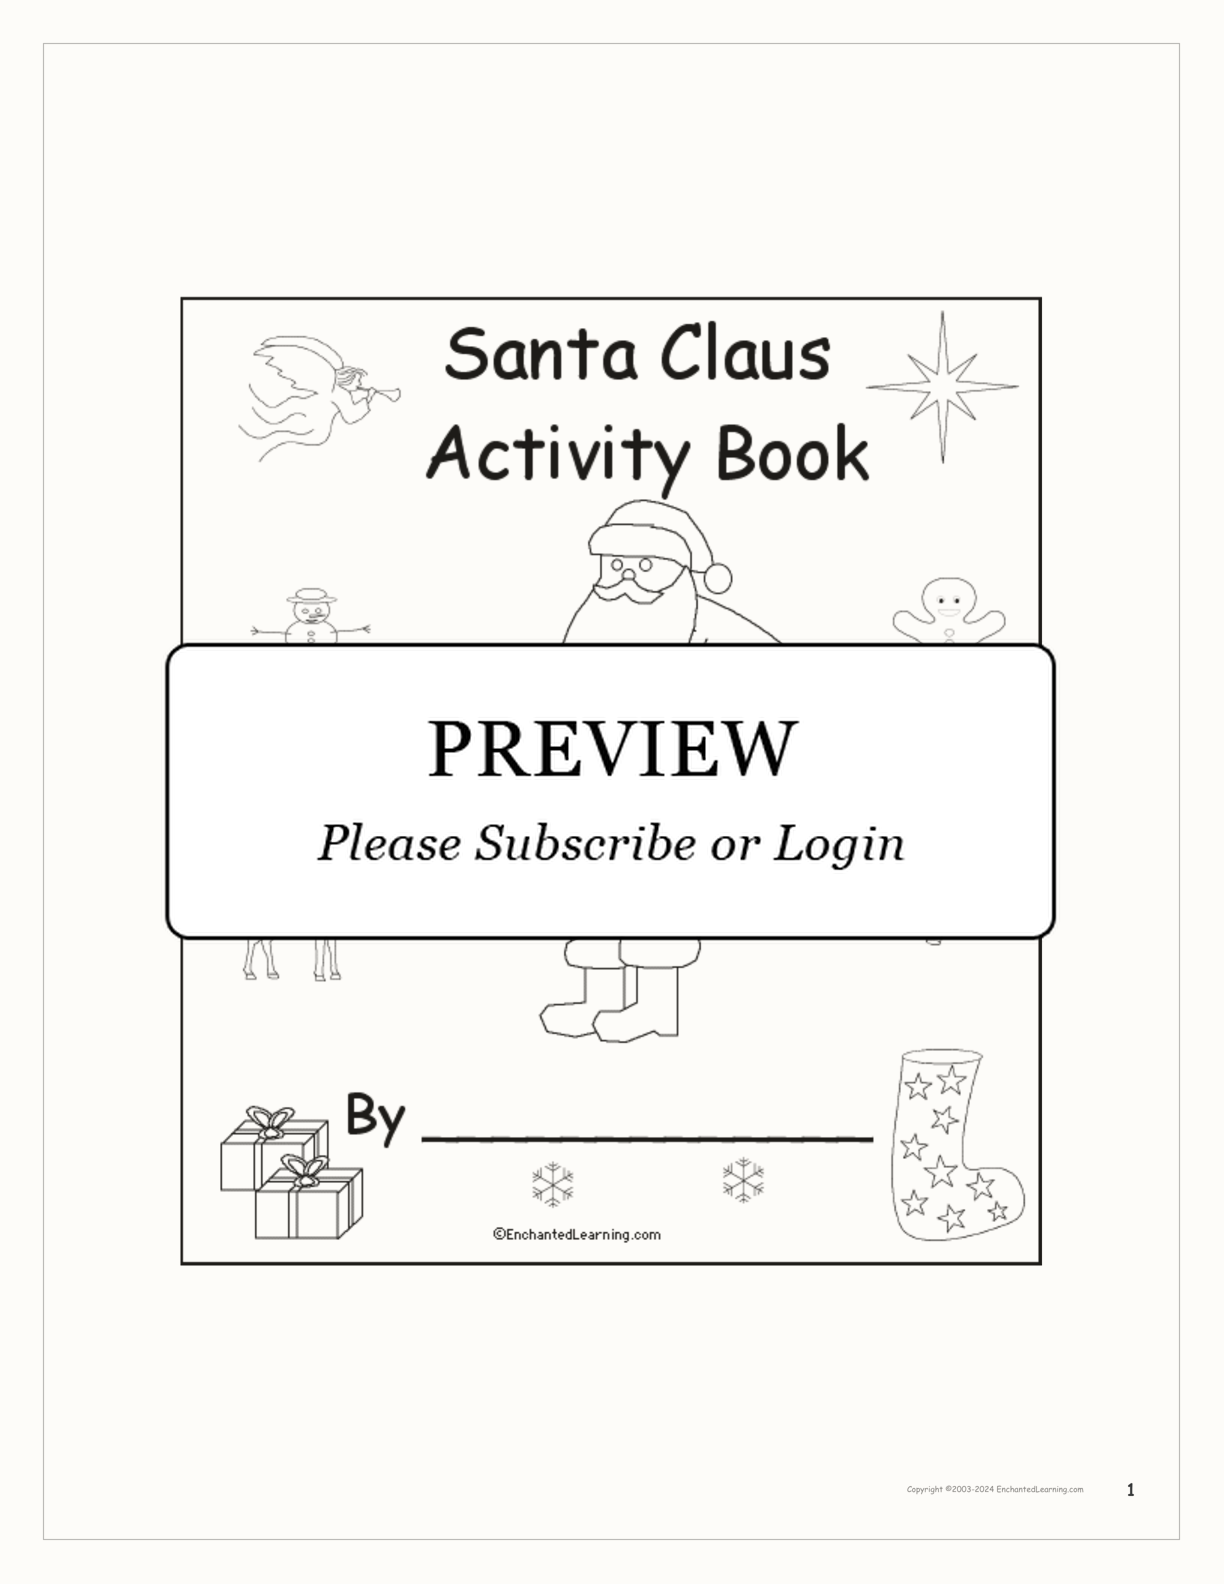 Santa Claus Activity: Early Reader Book interactive worksheet page 1